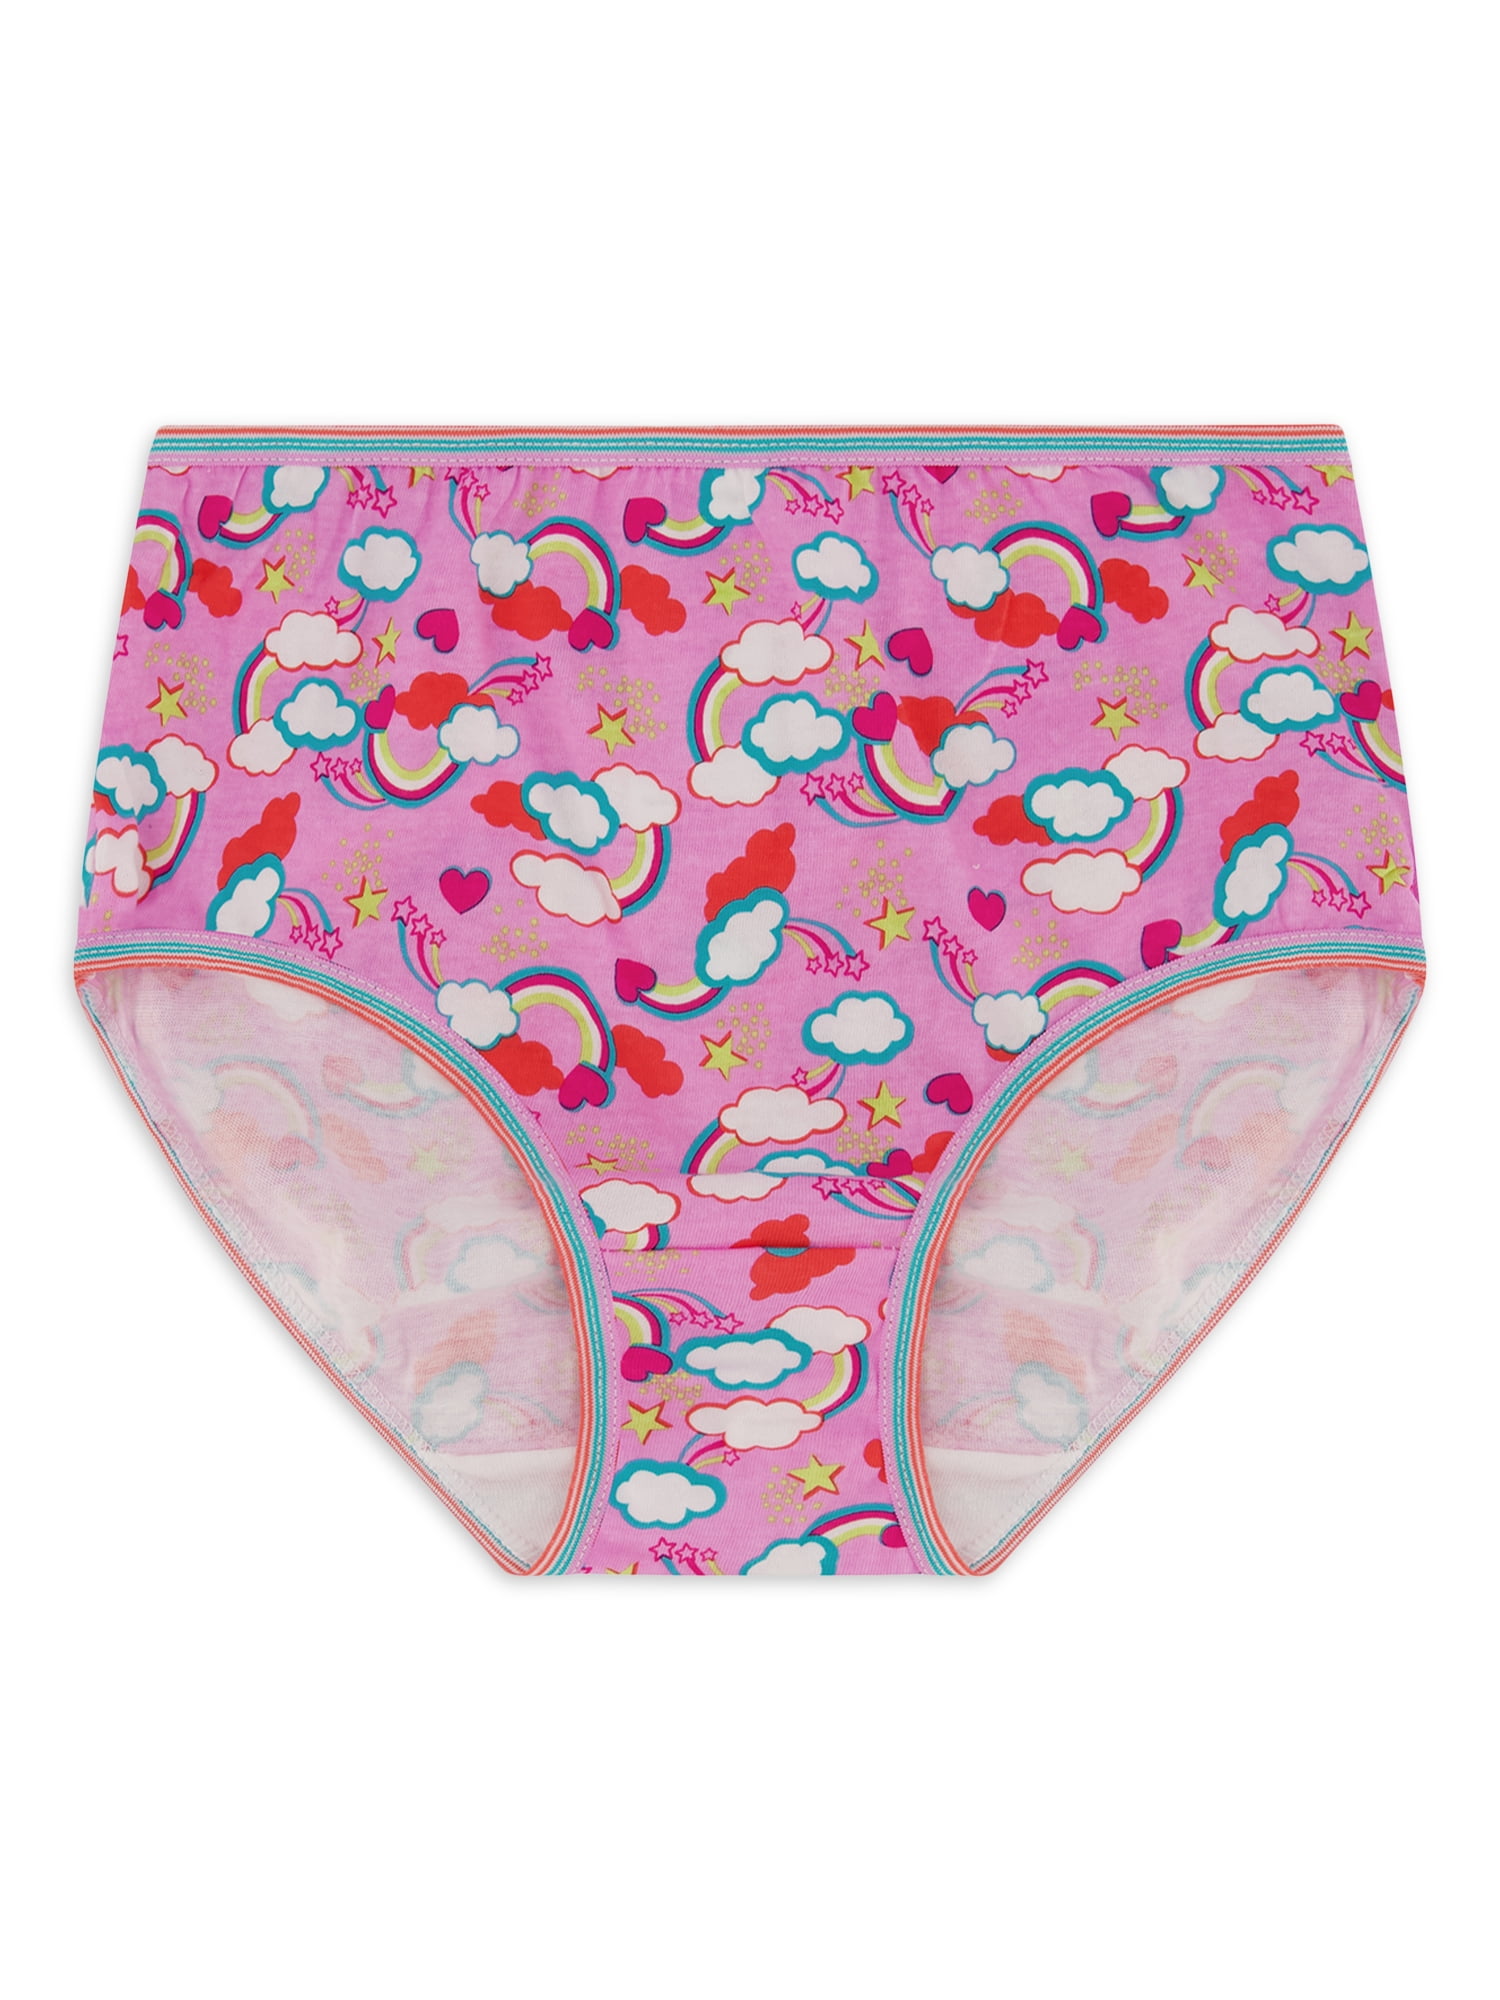 NWT Wonder Nation Girls Briefs Panties Underwear 10 pairs/pack